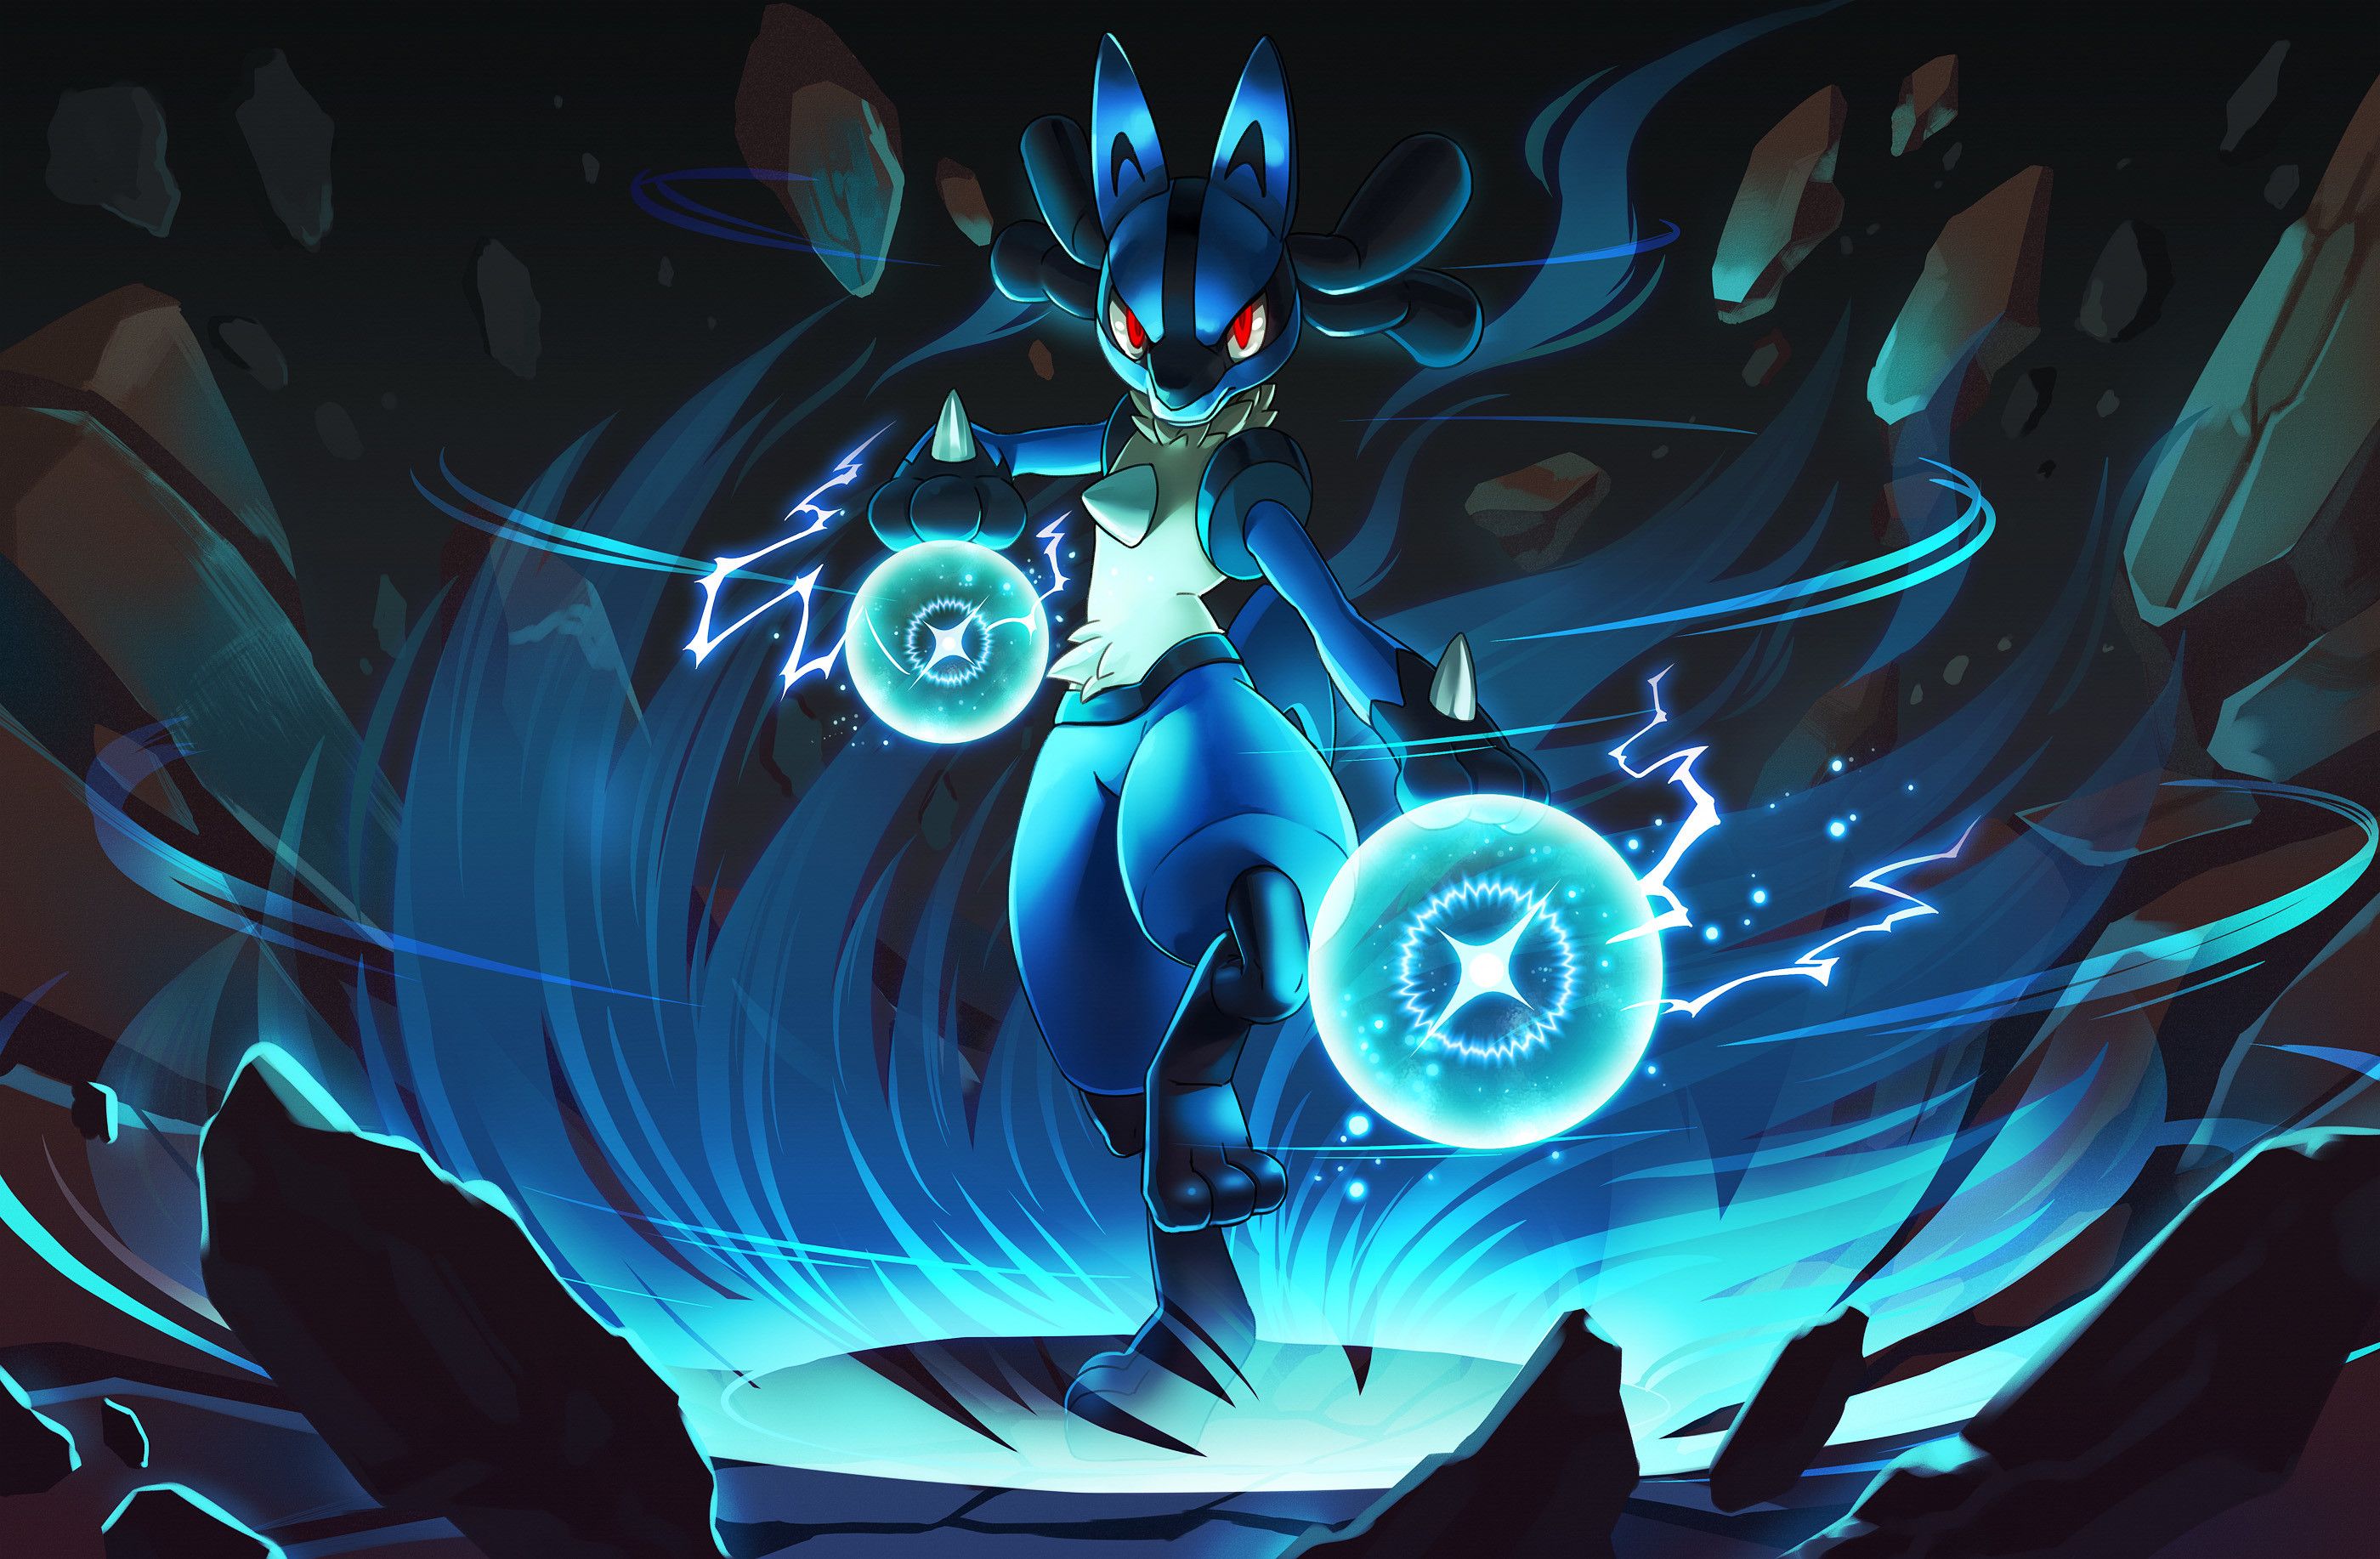 💯✨🕵👀 ENGEL GO 🚨📱 💯✨ on X: #Arceus coming soon to Pokémon